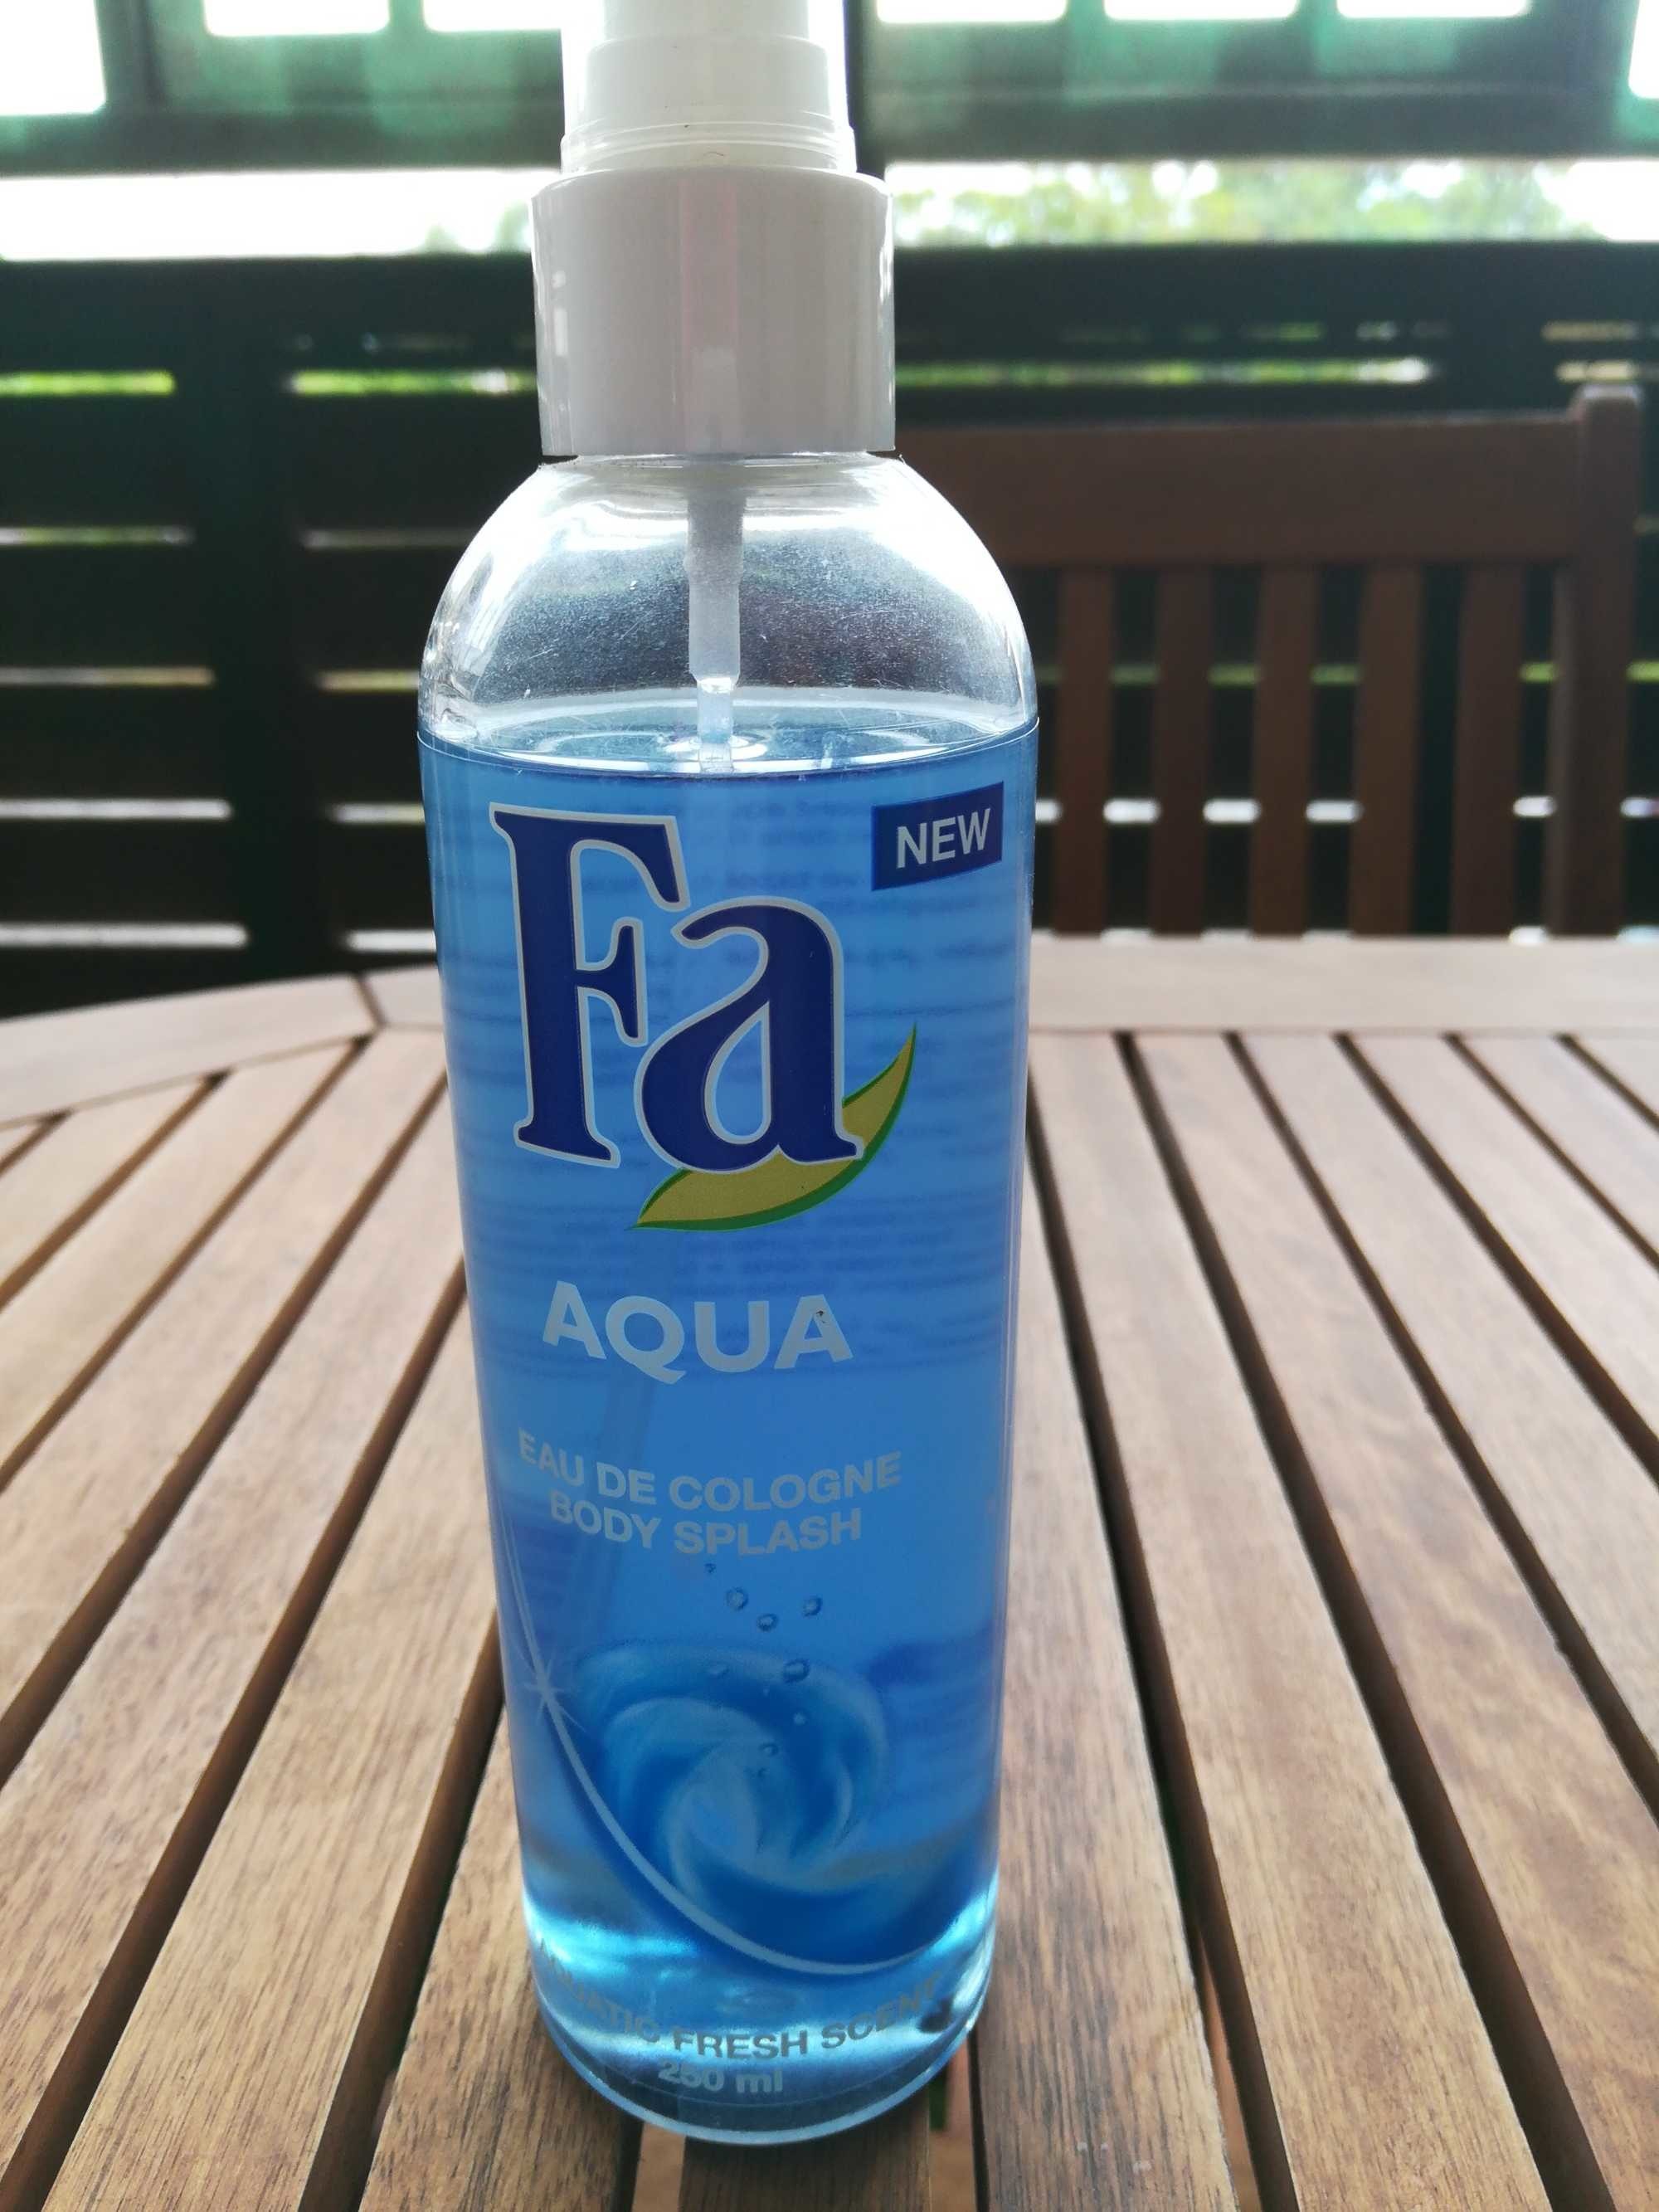 Aqua eau de cologne - Tuote - fr